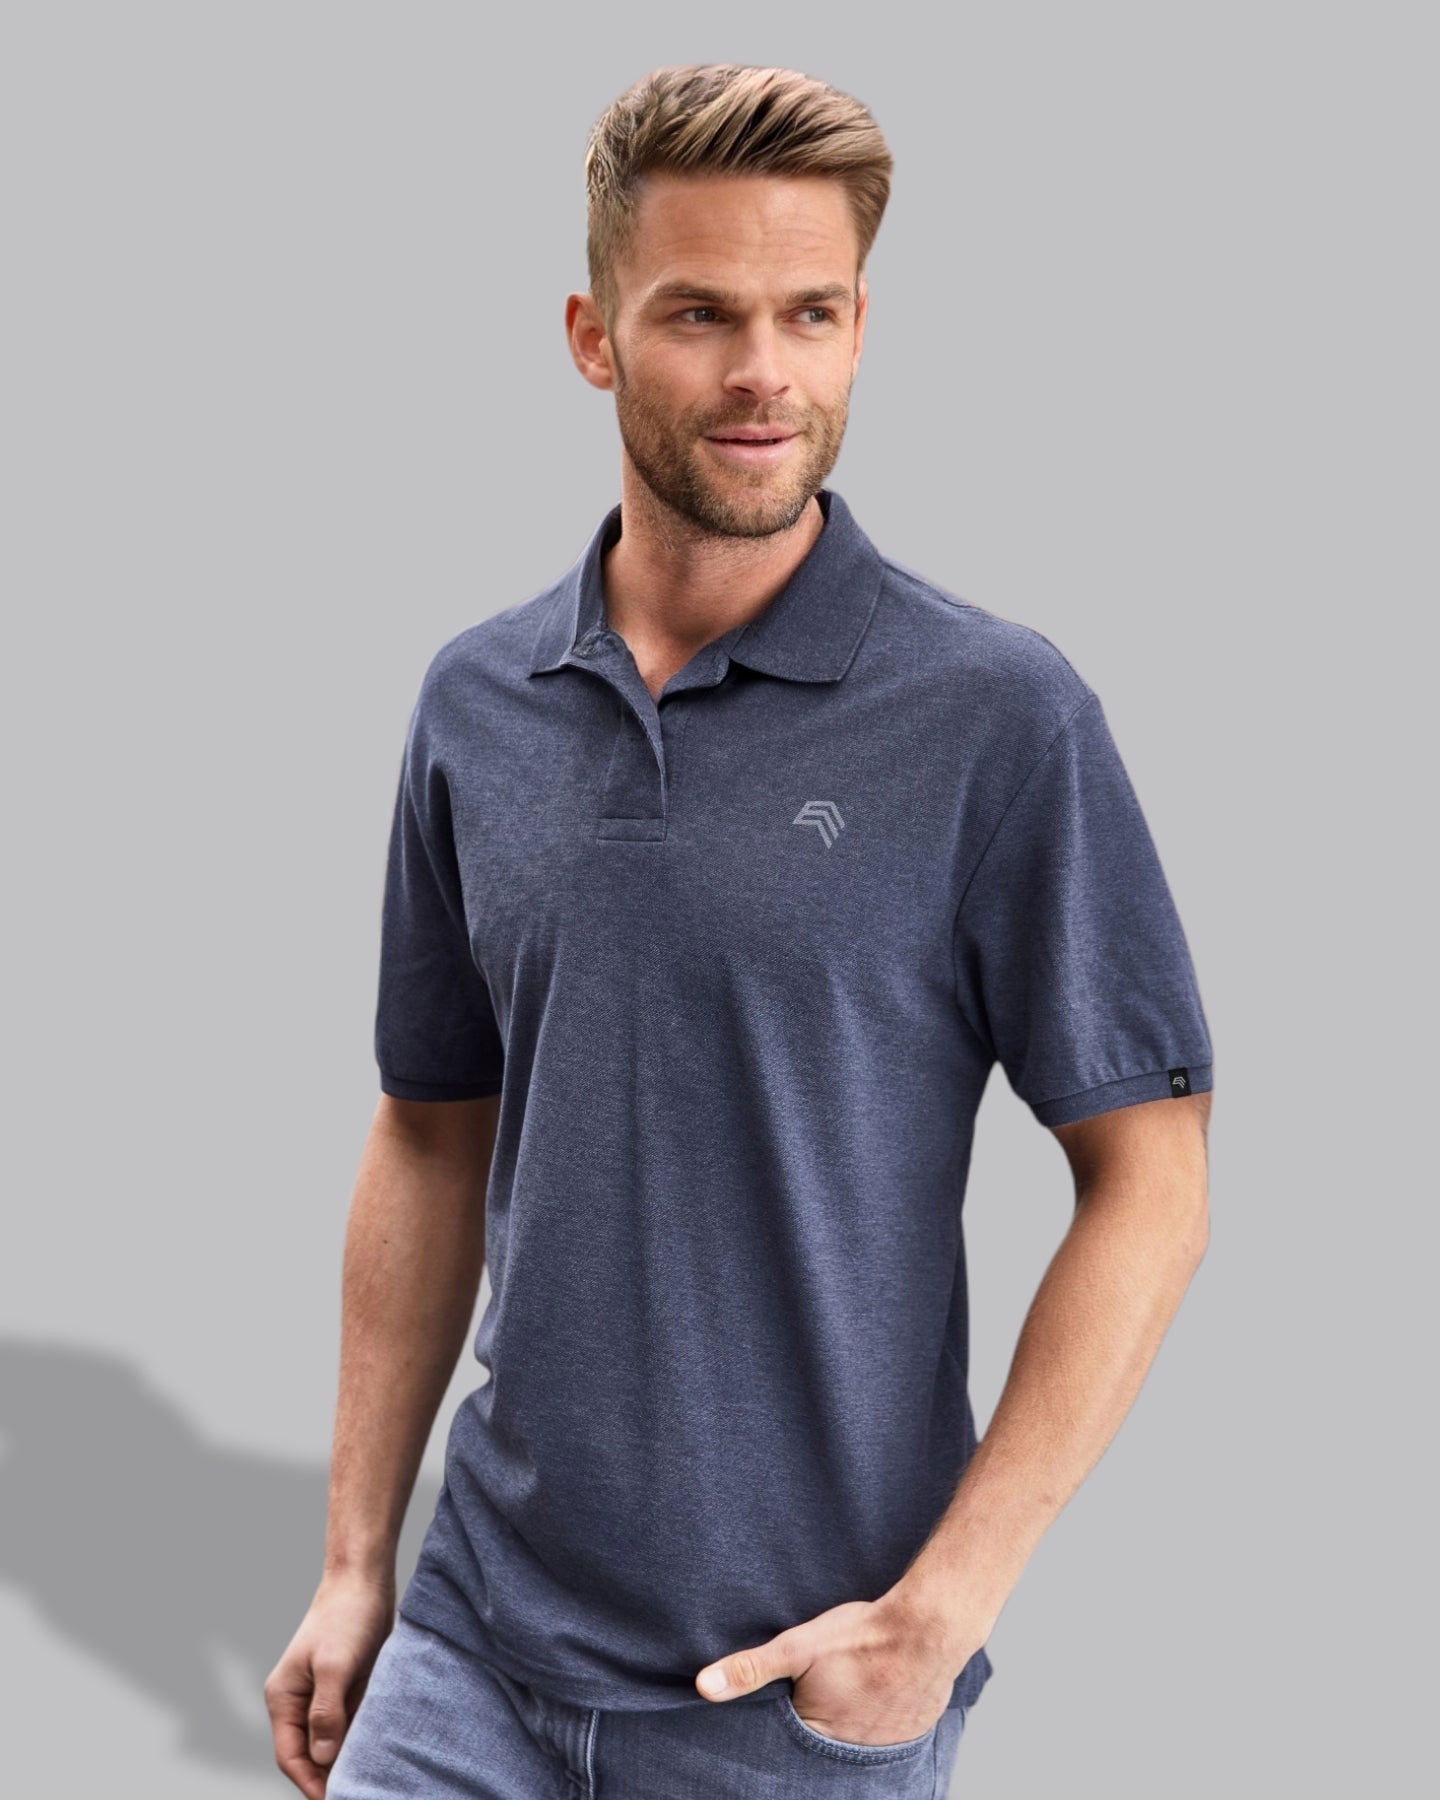 JAN 8010 ― Herren Bio-Baumwolle Polo Shirt - Light Blau